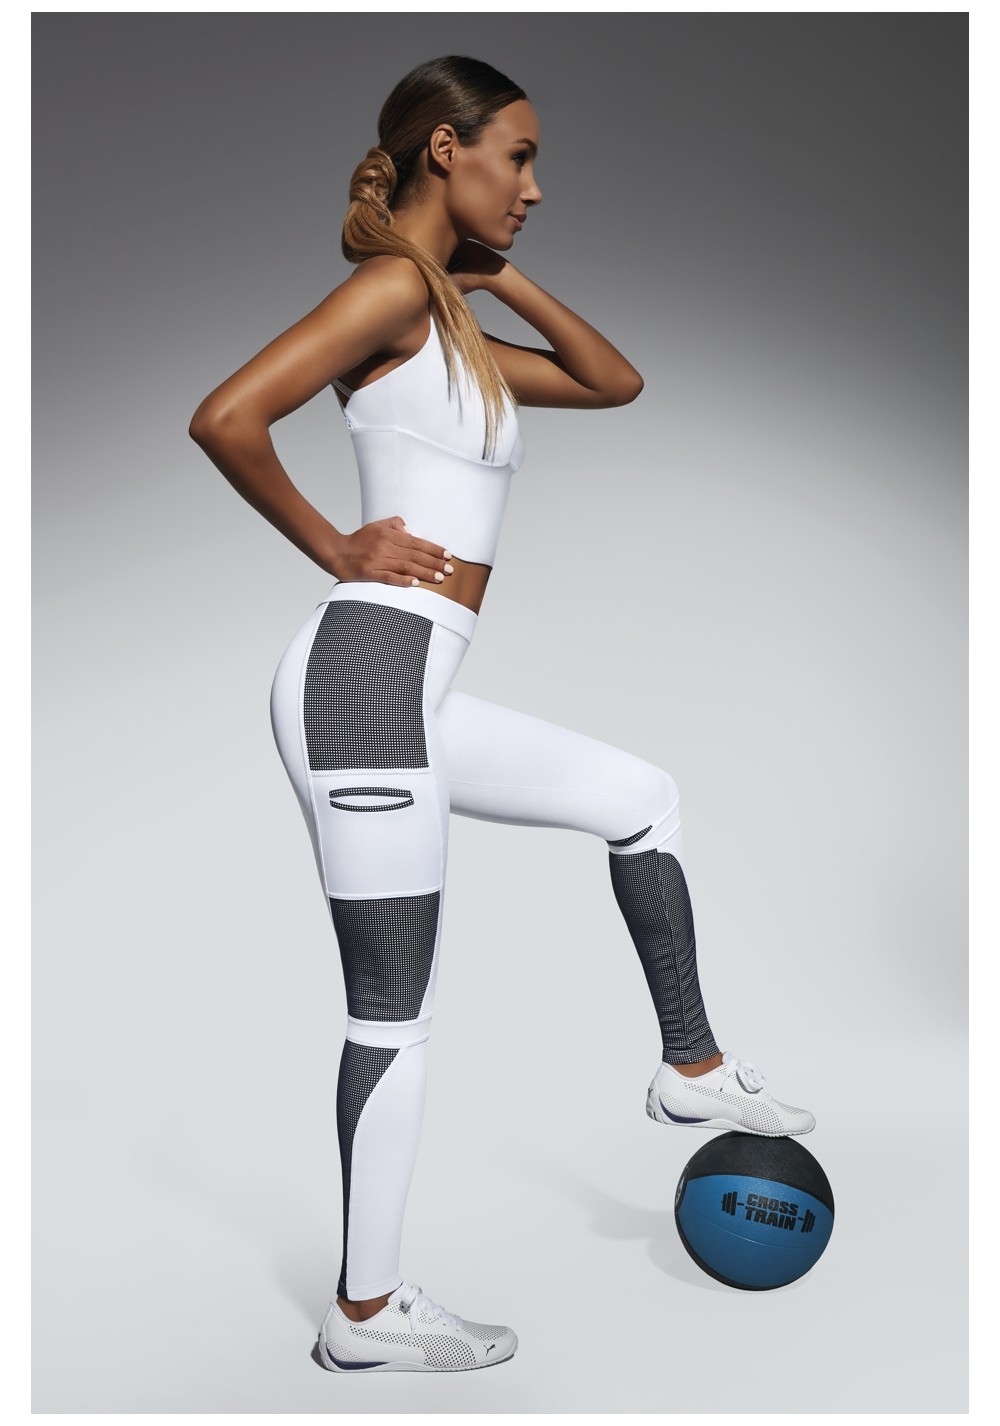 Bas Bleu PASSION sports leggings with appliqués and a slim fit